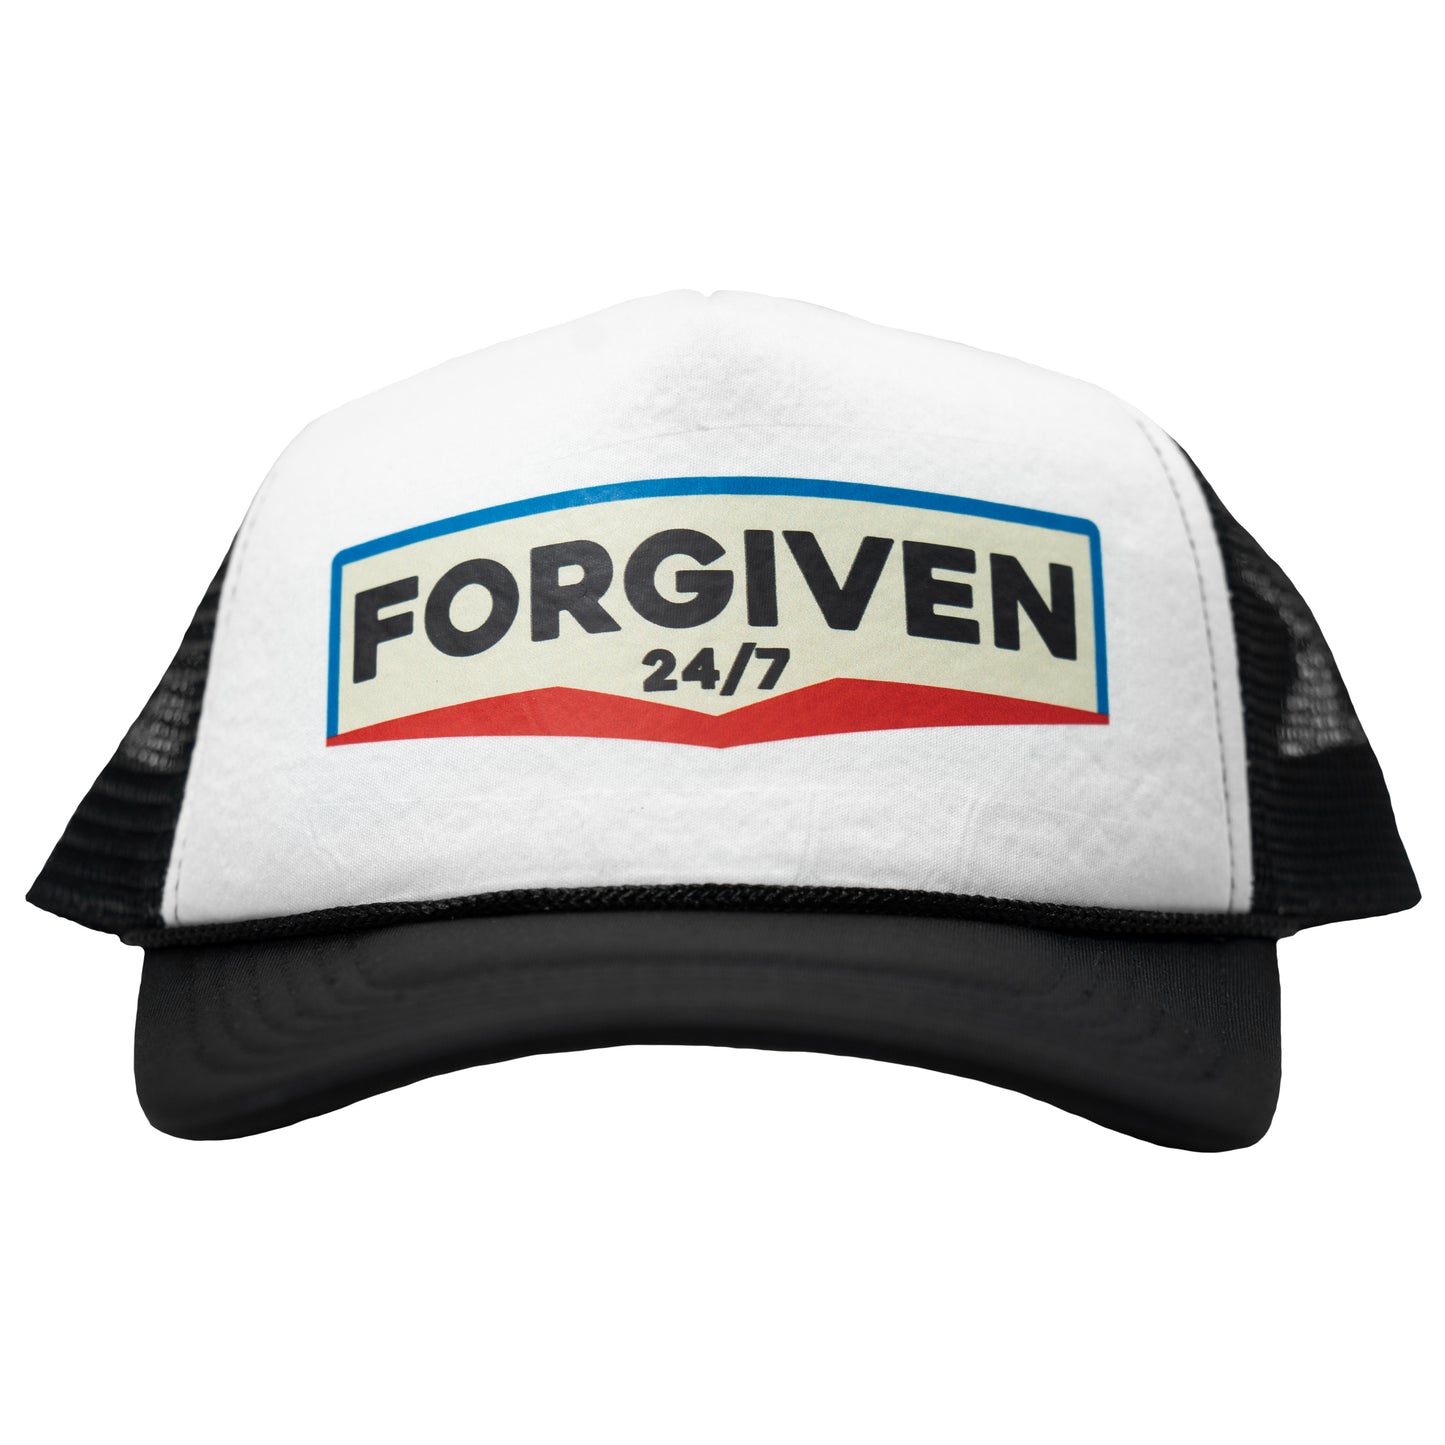 Forgiven 24/7 Sign B/W Trucker Hat